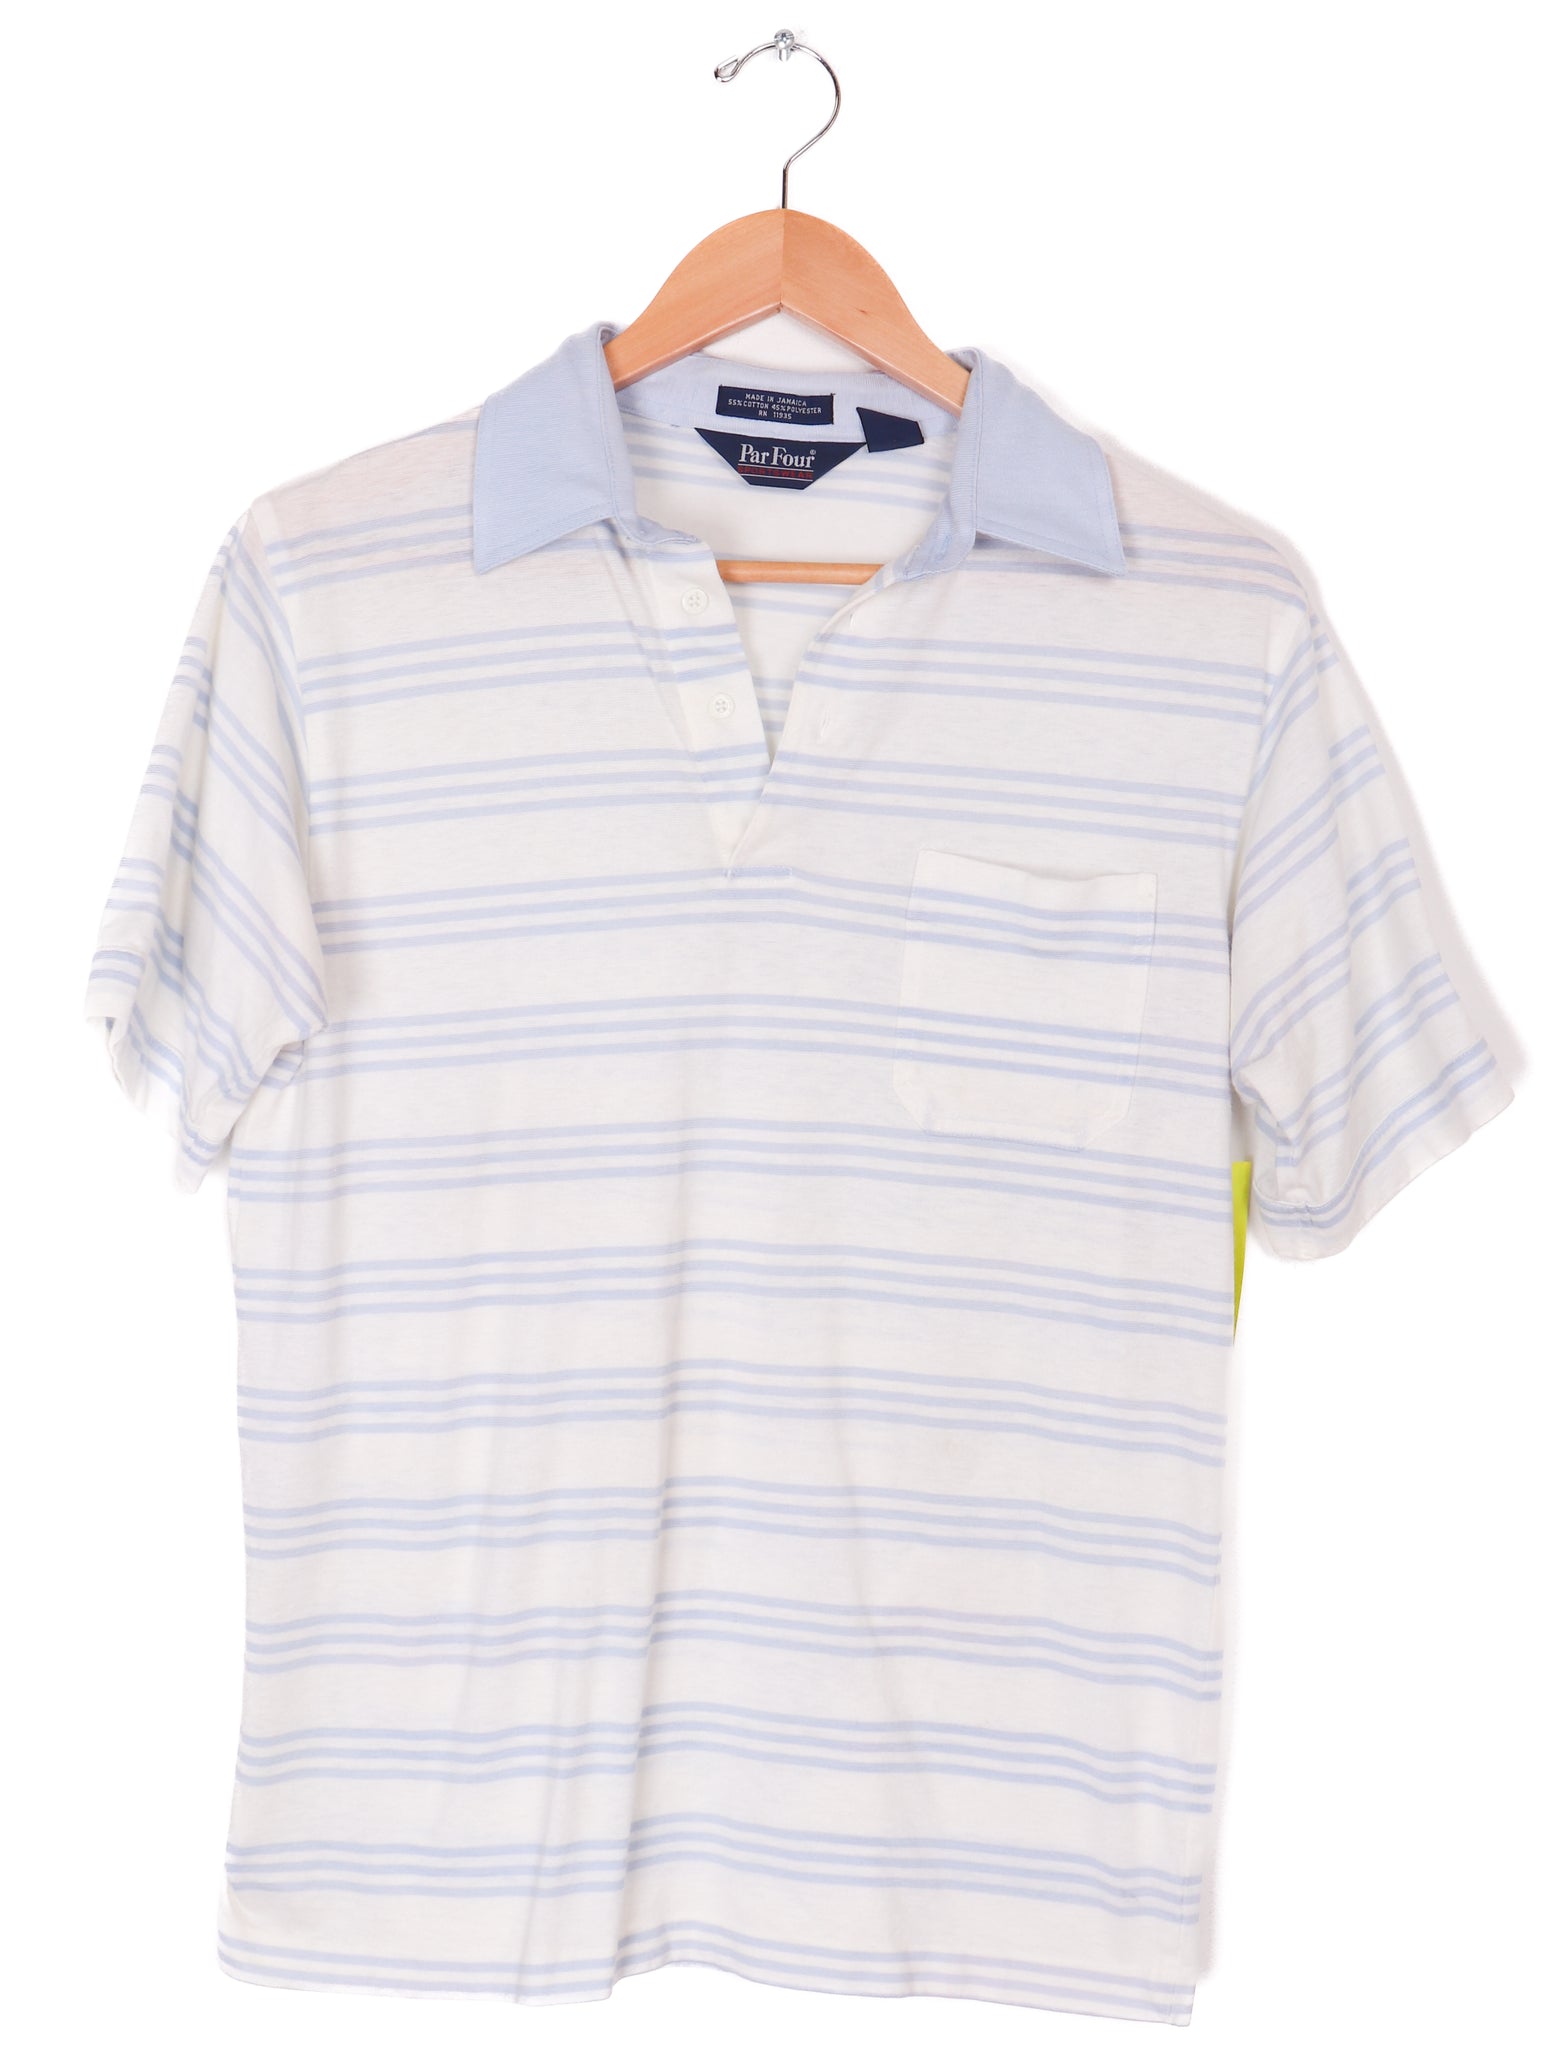 Early 90s Par Four Sportswear Blue Striped Collared Shirt